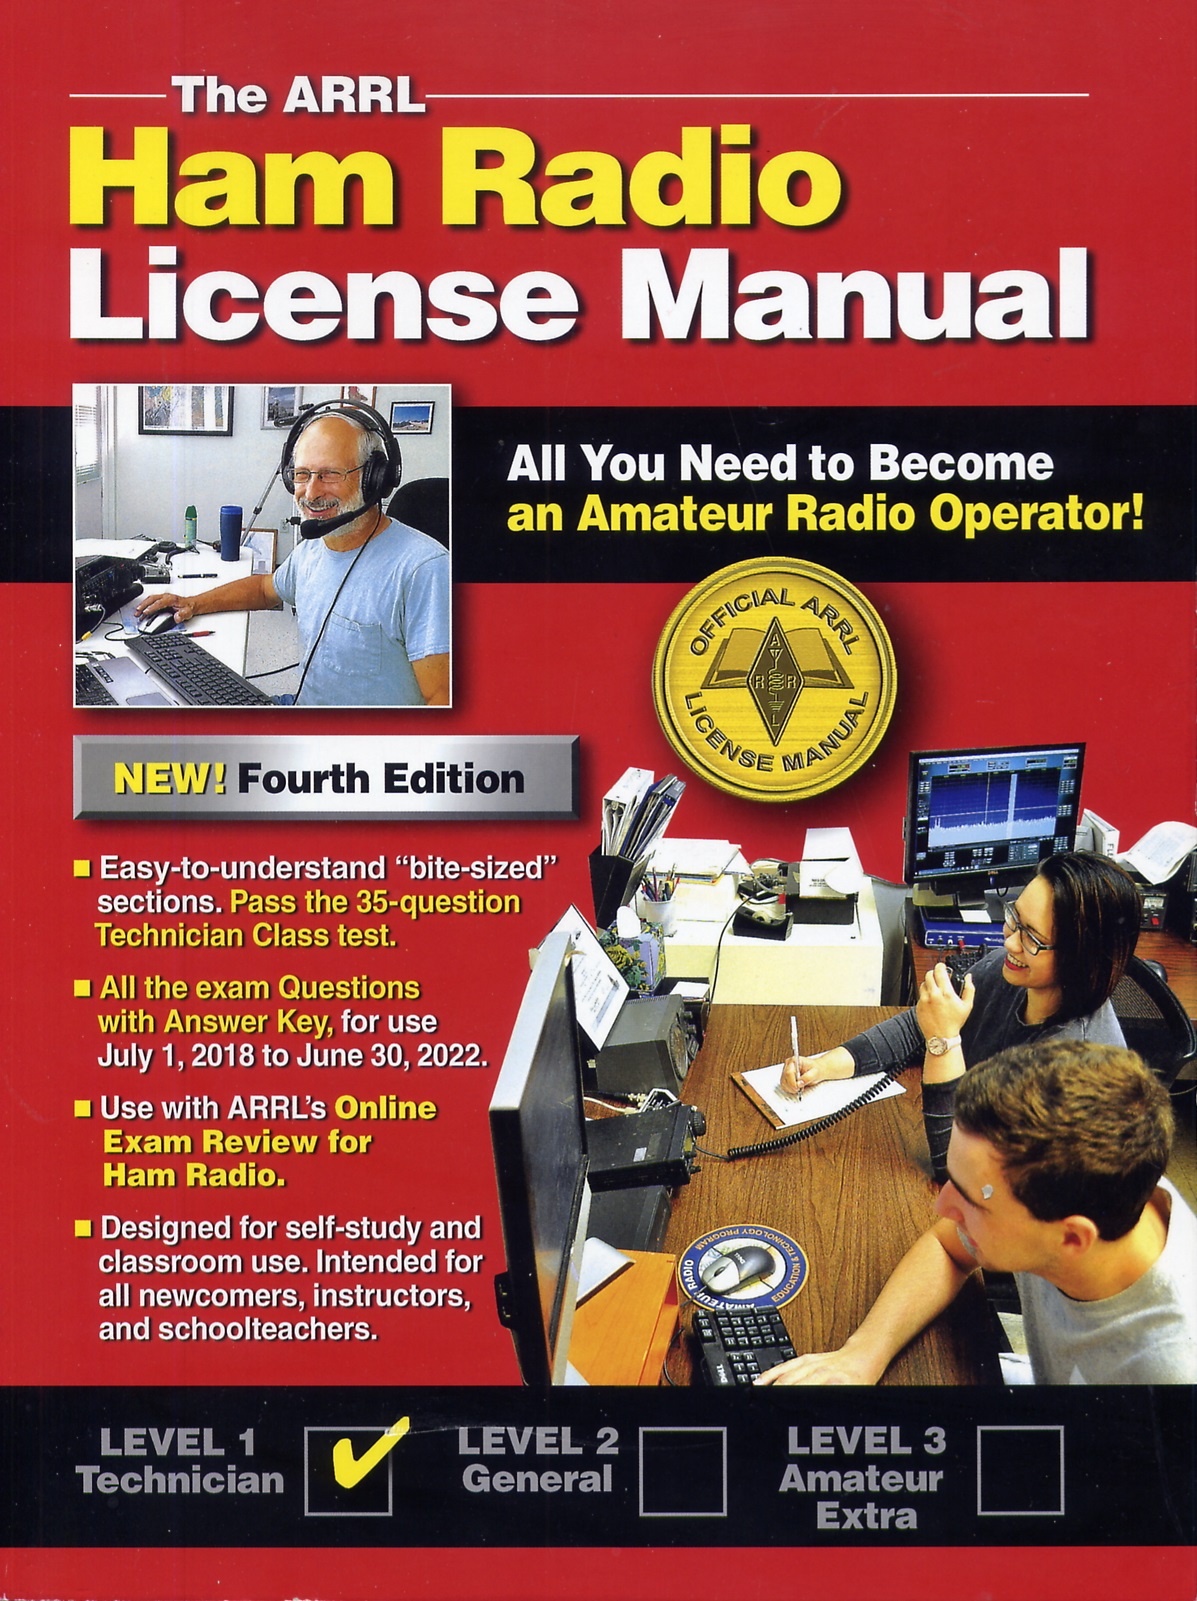 The ARRL Ham Radio (Technician Class) License Manual - Fourth Edition - 2018-2022